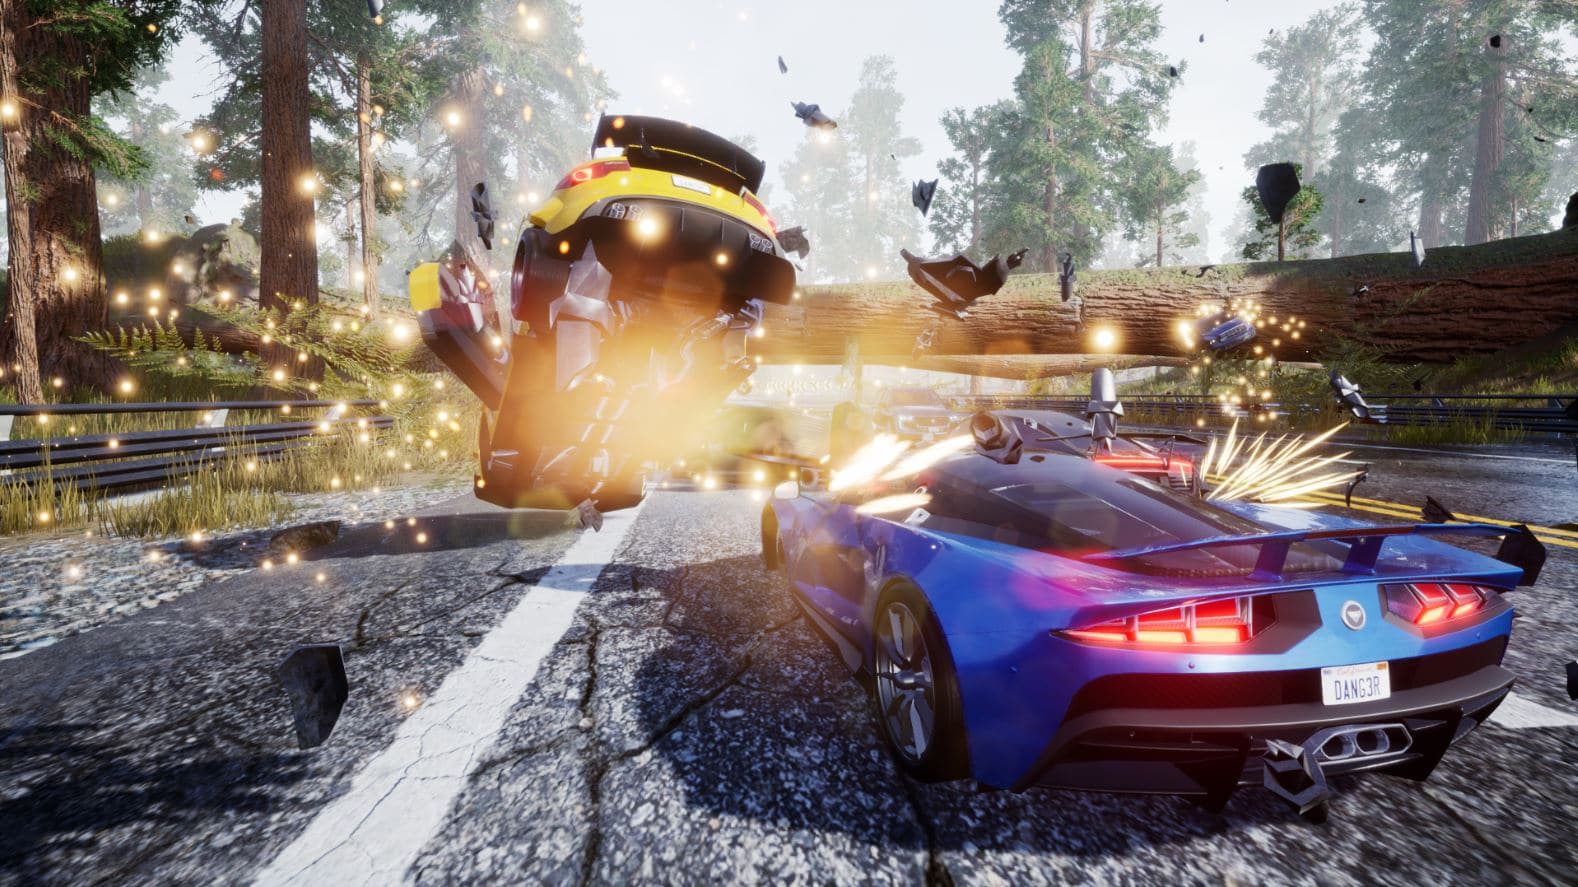 Sucesor Espiritual de Burnout, Dangerous Driving llegará en abril como exclusiva de Epic Games Store en PC